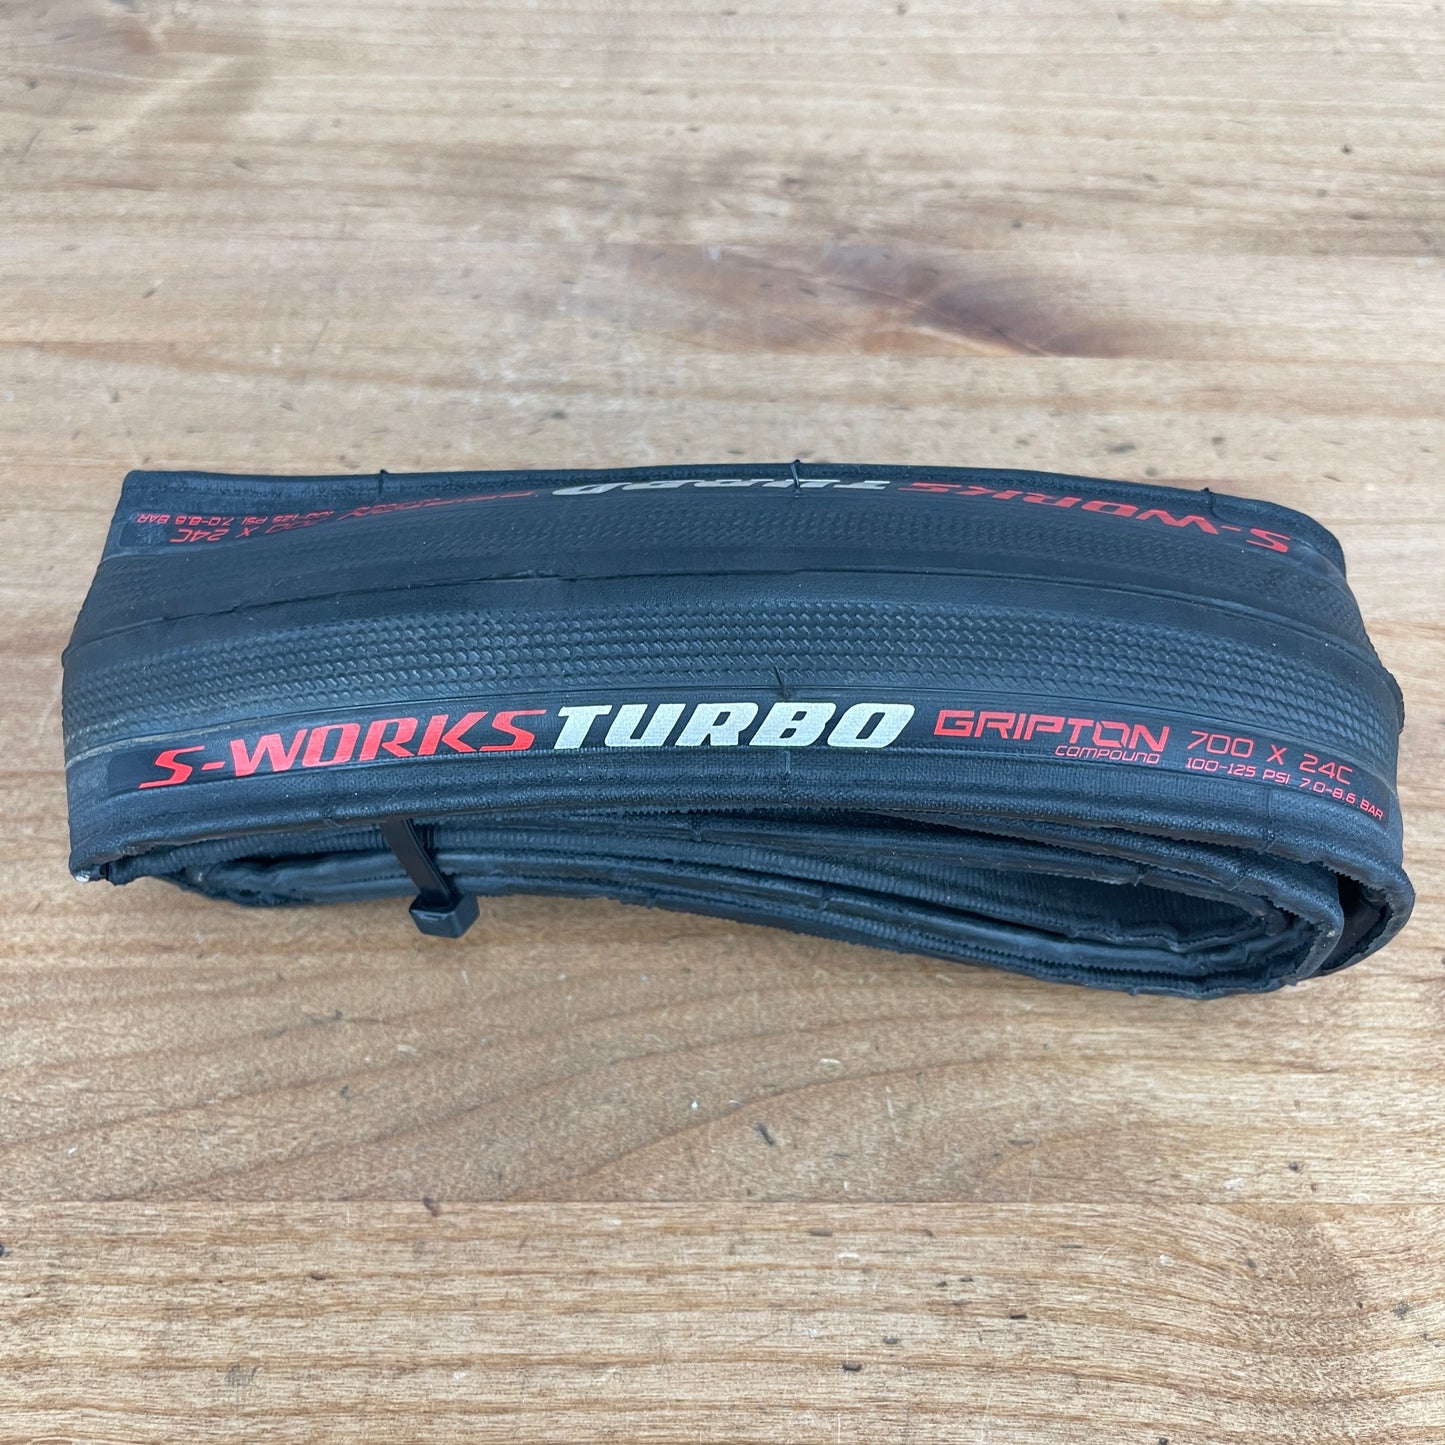 New! Specialized S-Works Turbo Gripton 700c x 24mm Single Clincher Tire